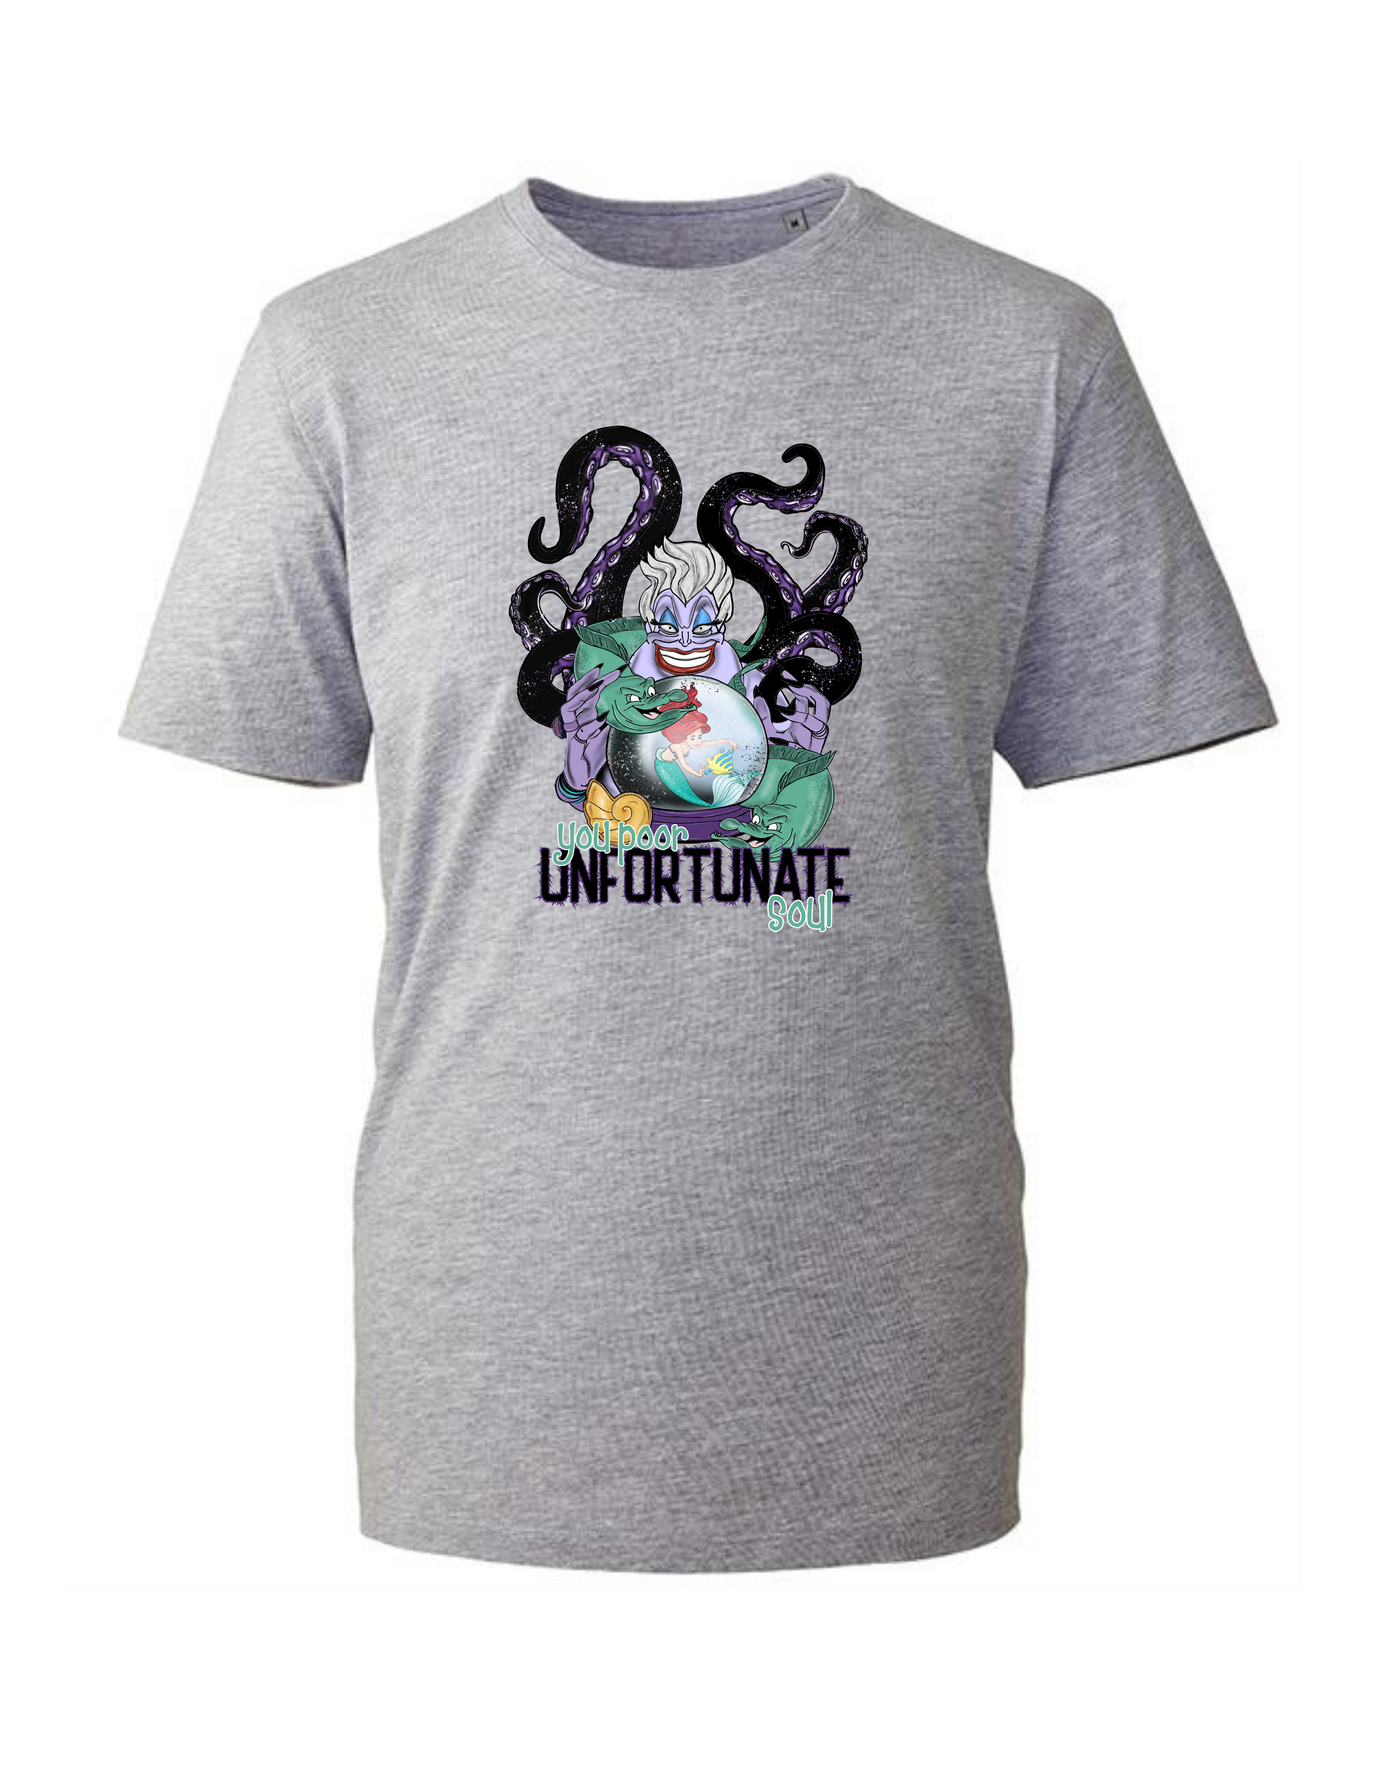 Light Grey "Unfortunate Soul" Unisex Organic T-Shirt